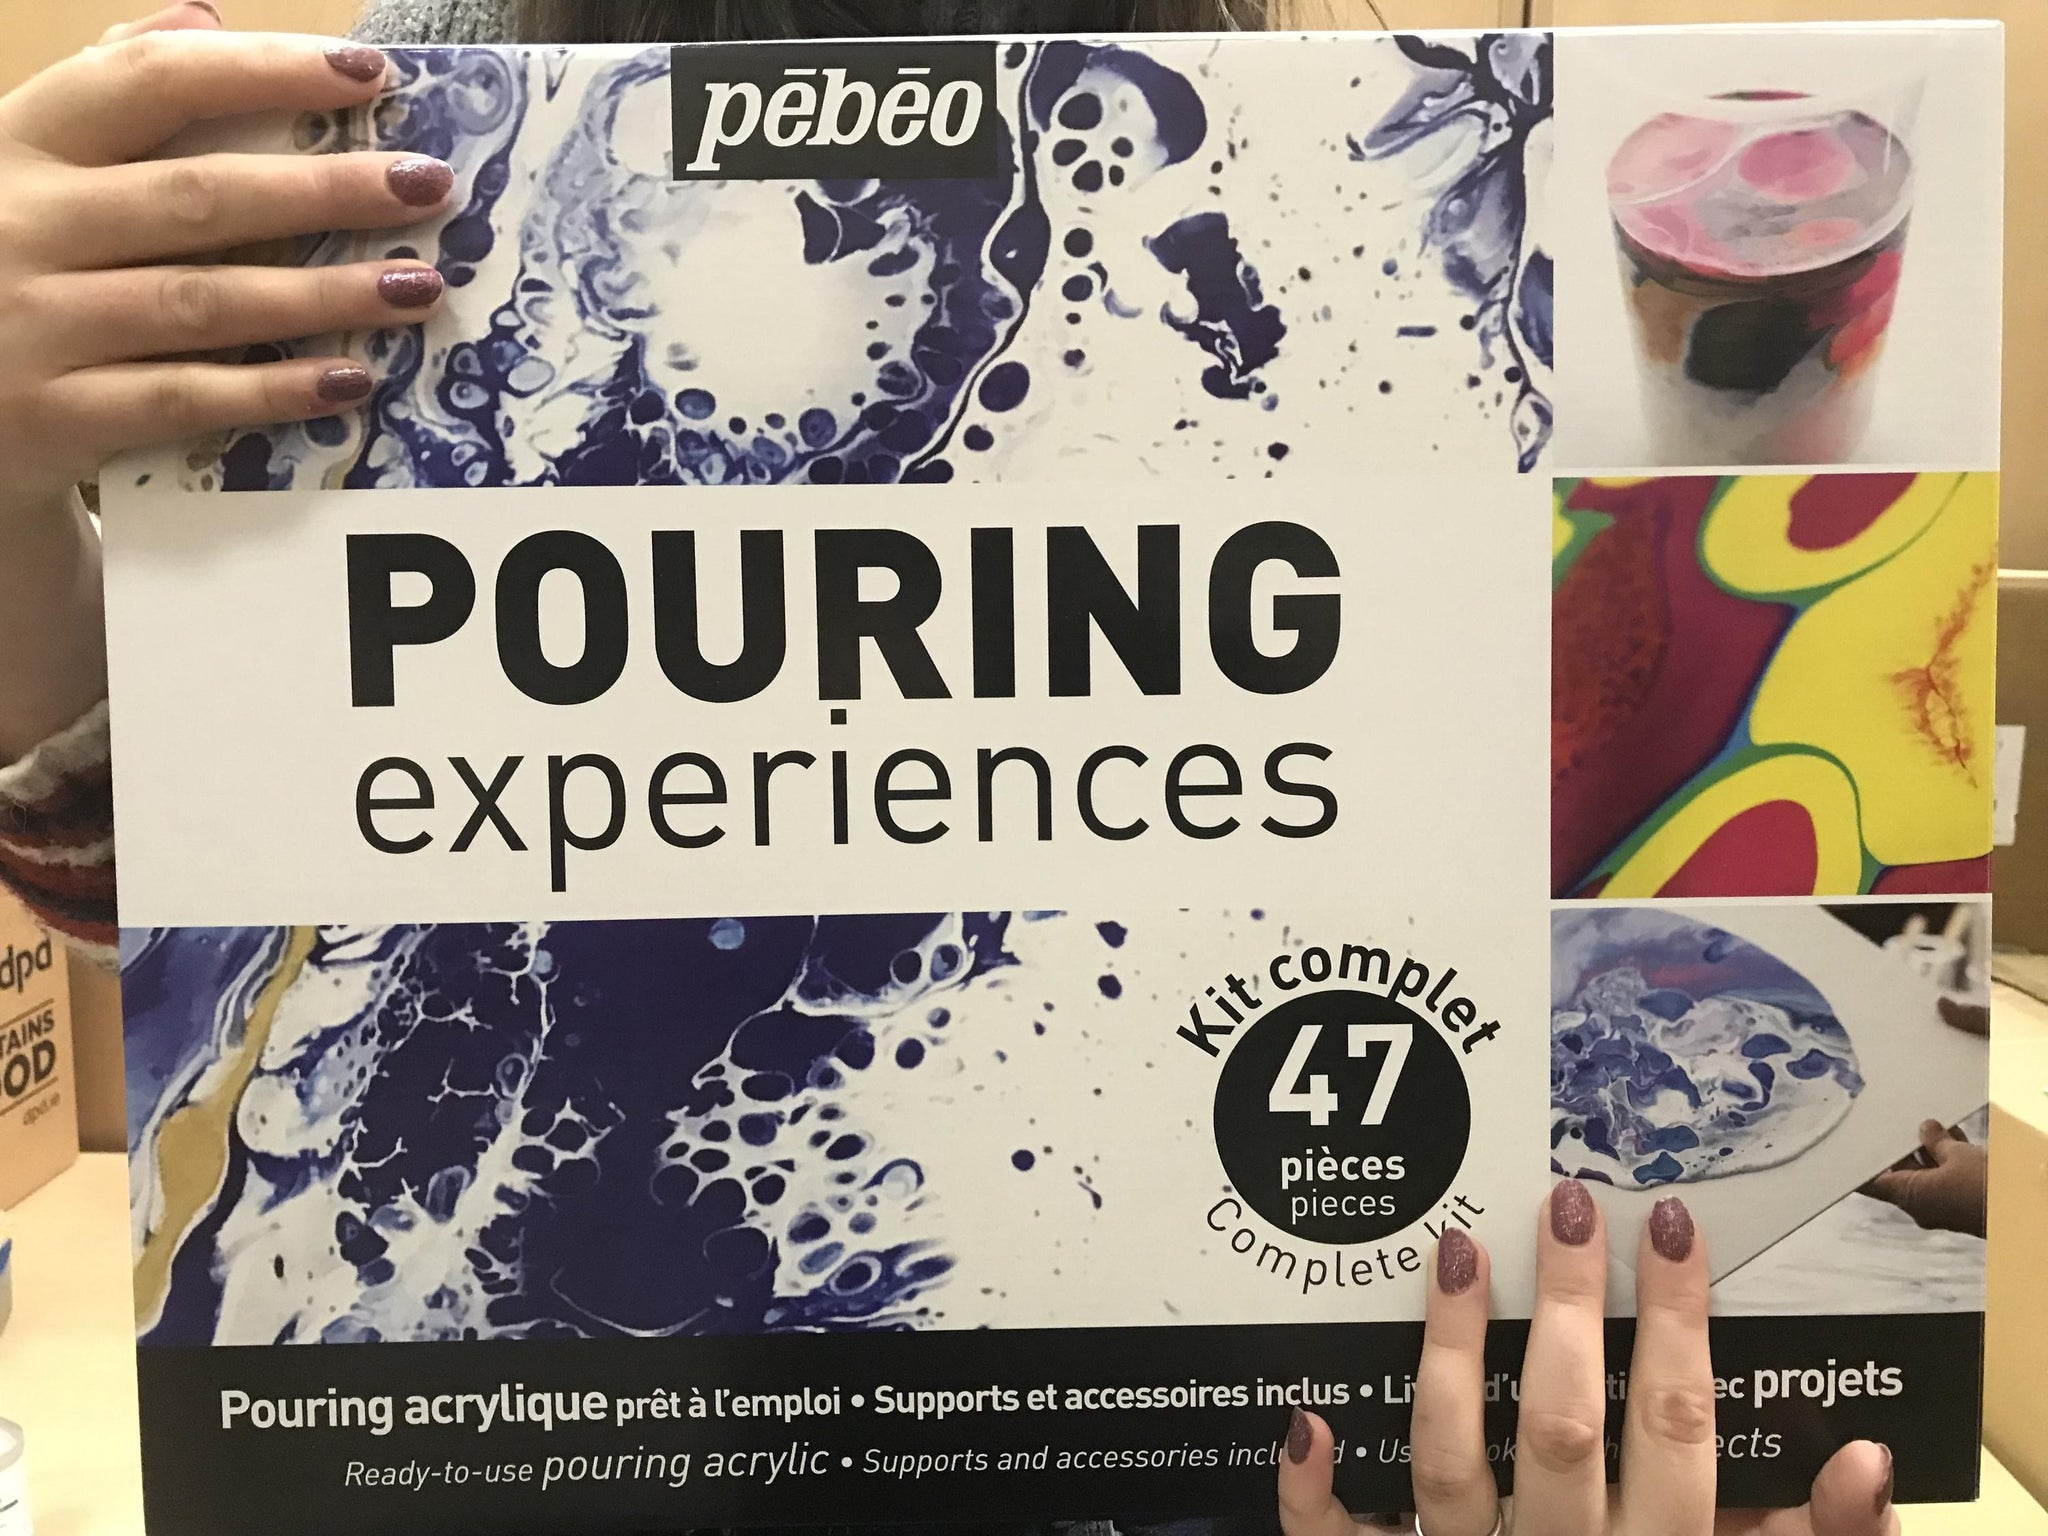 Pebeo - Acrylic Pouring Medium experiences - Studio Workbox Complete Kit